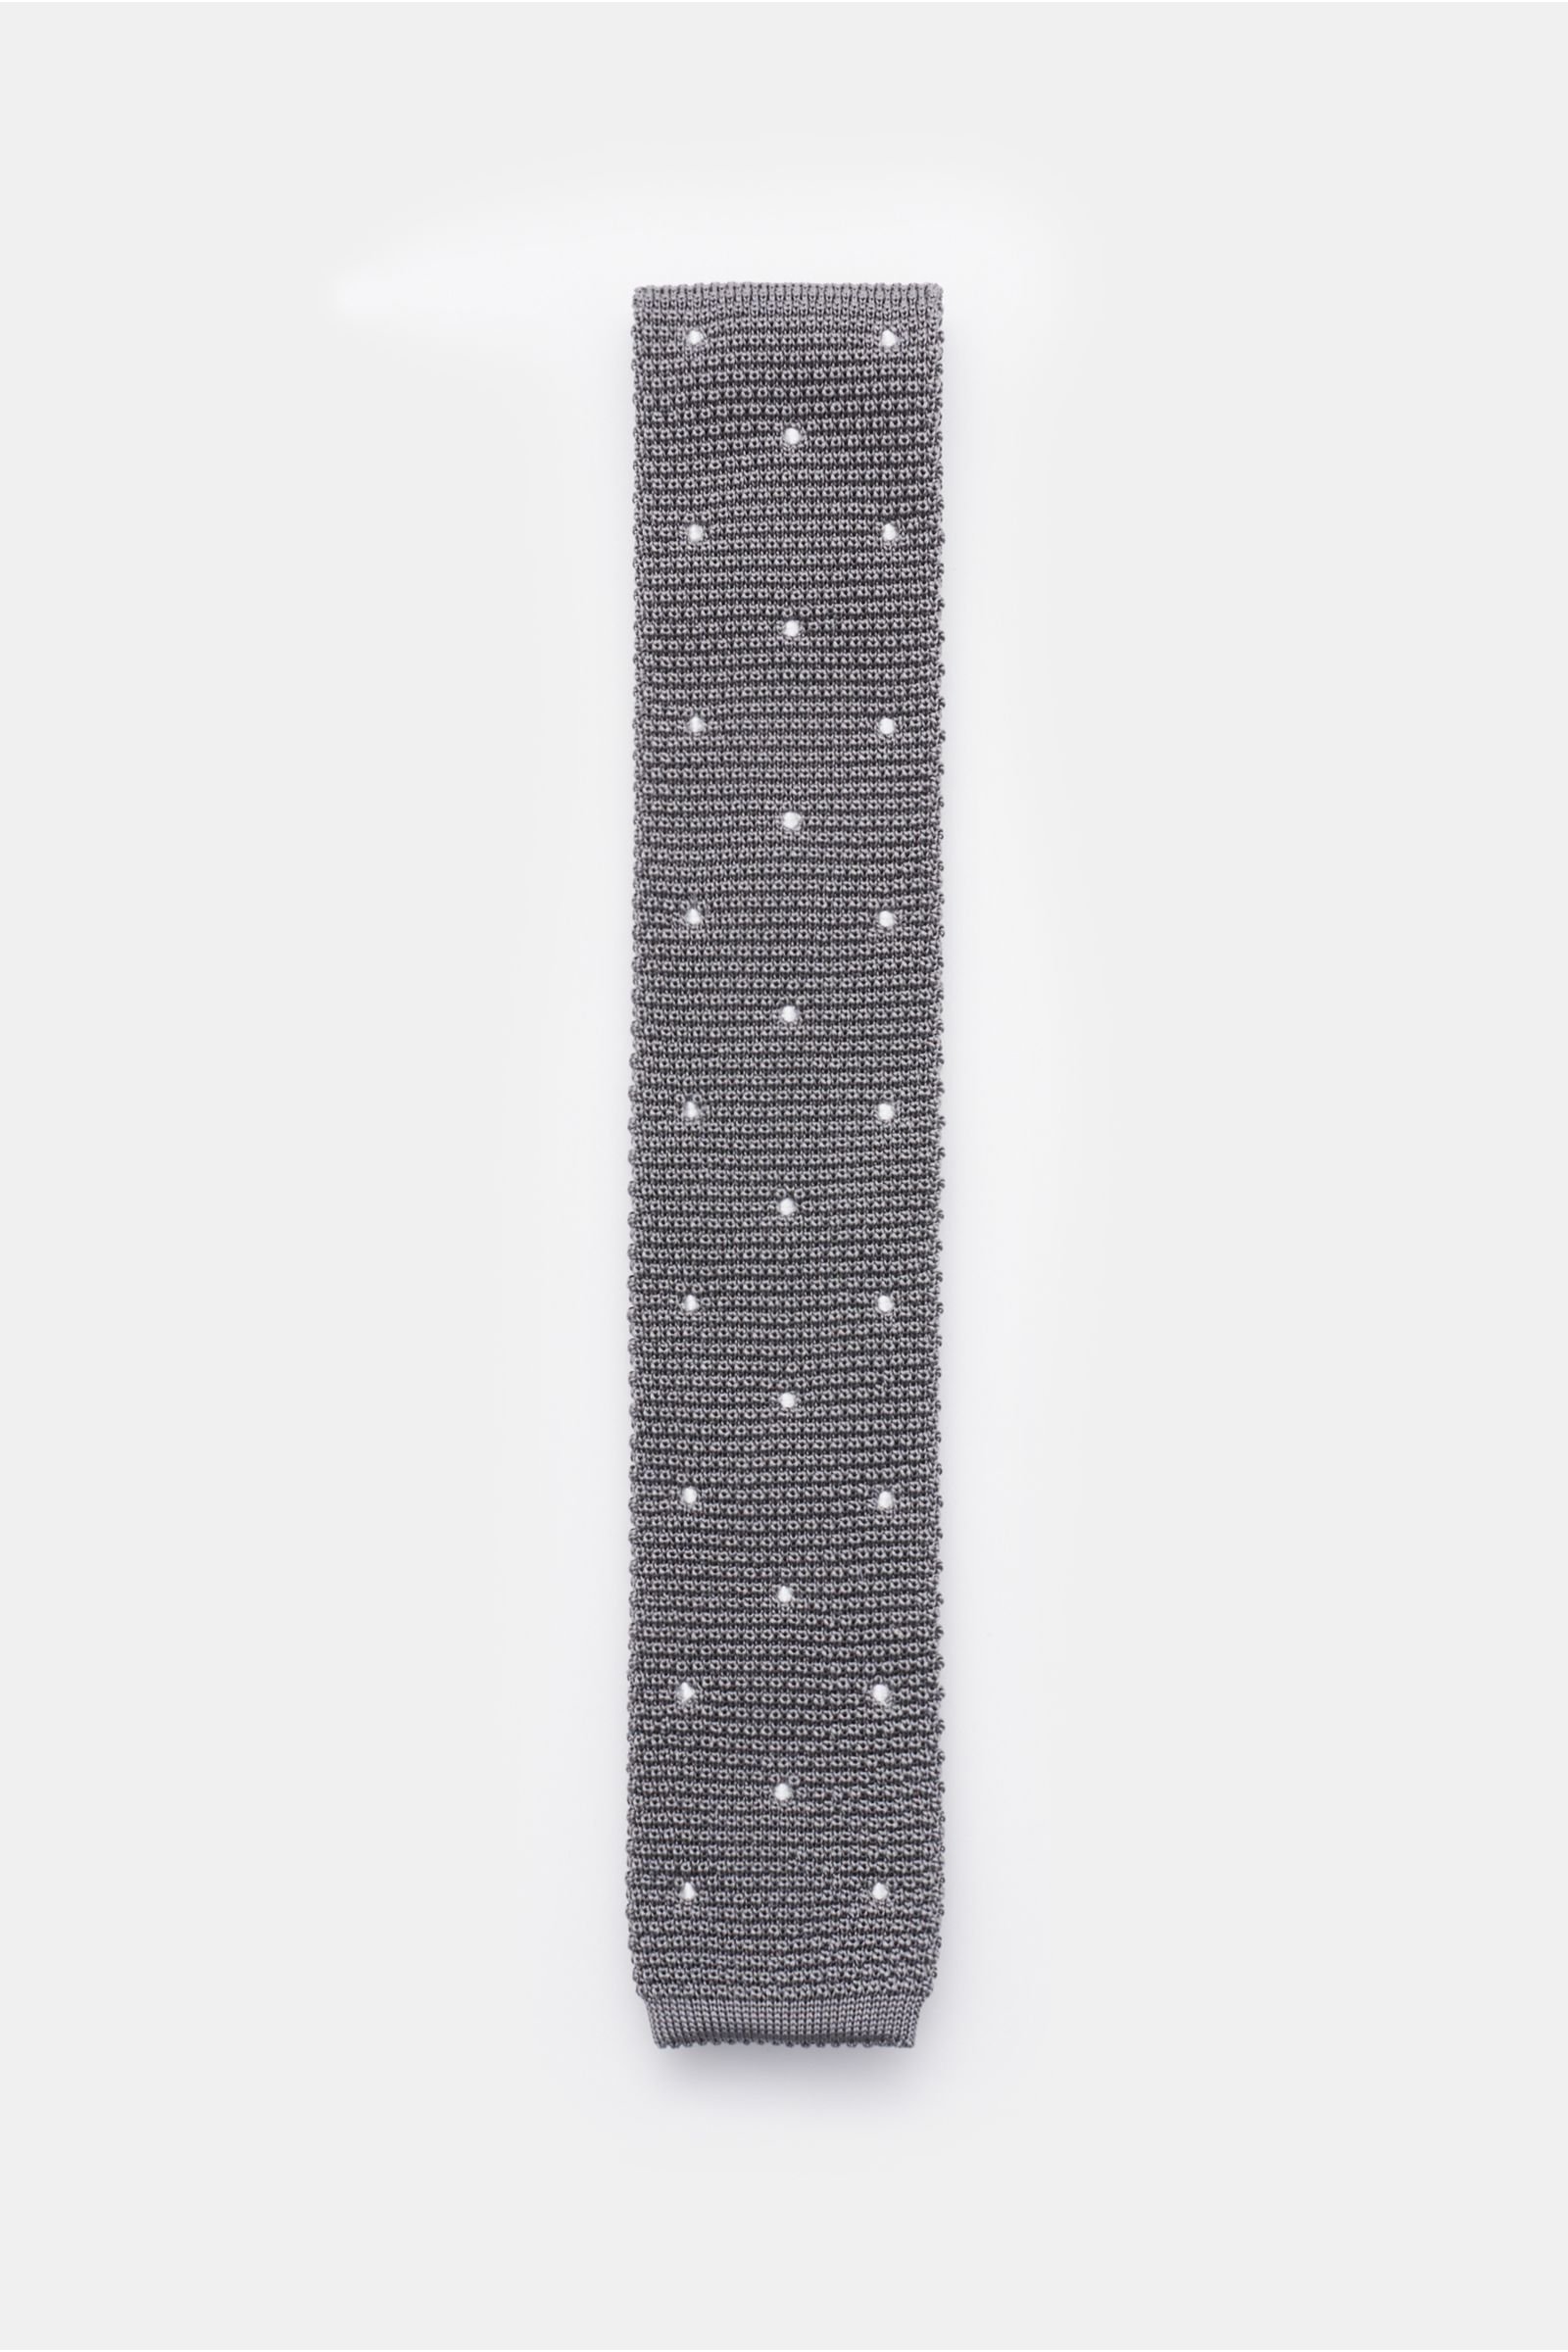 Silk knit tie grey/white dotted